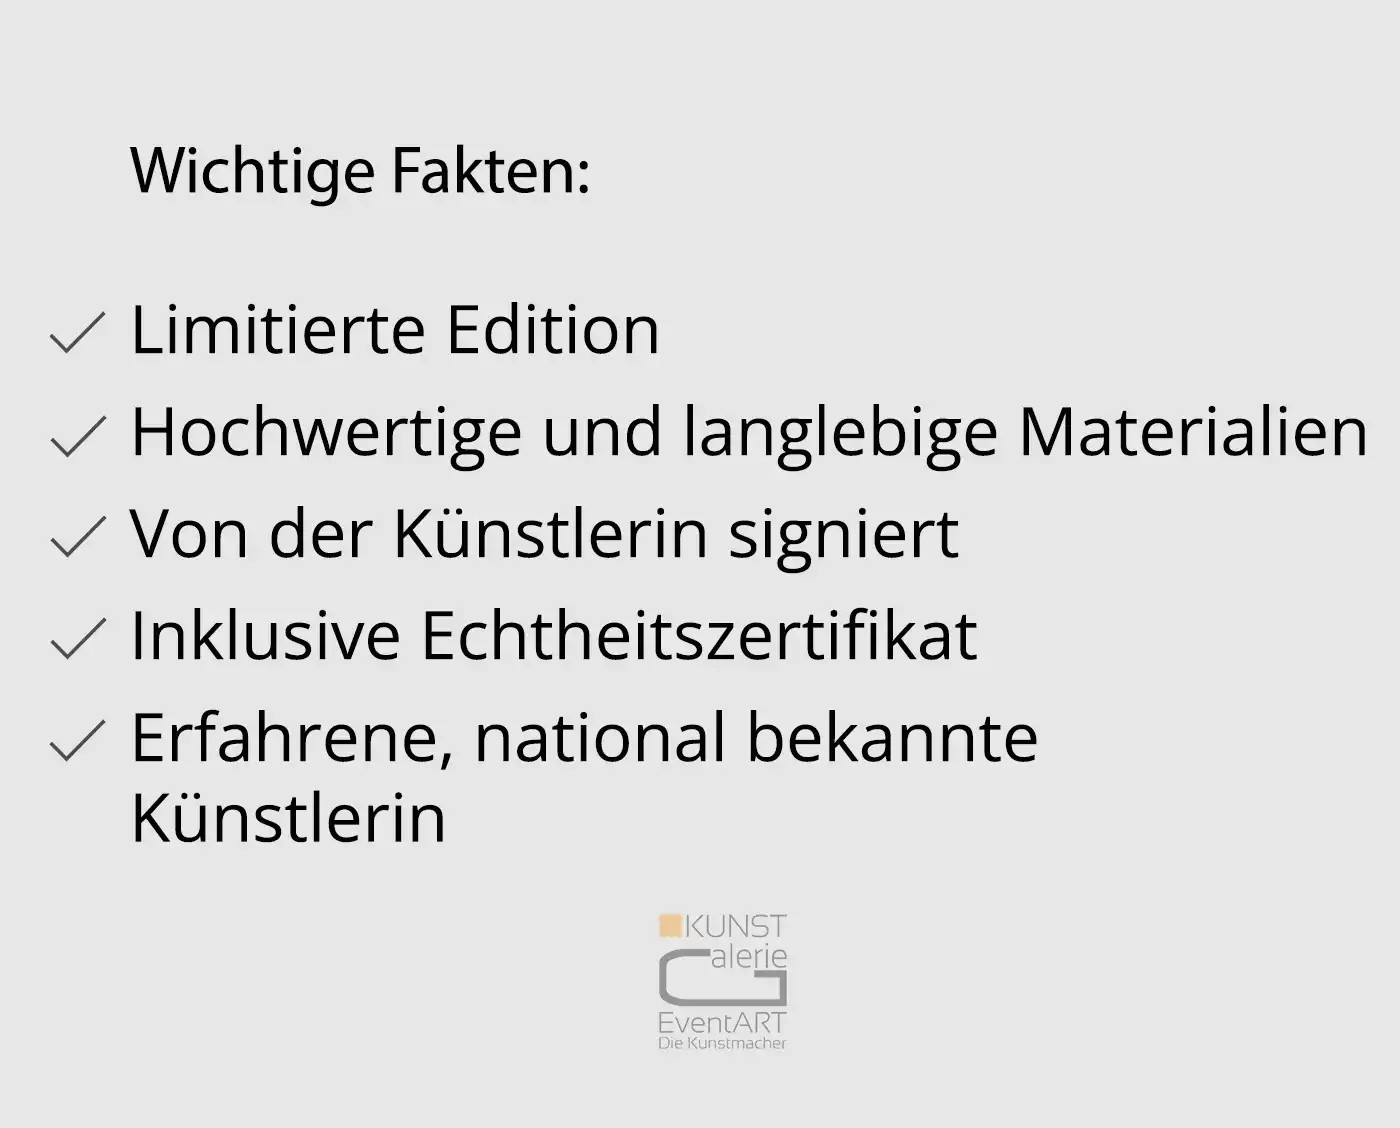 M. Kühne: "Orange Light", Edition, signierter Kunstdruck, Nr. 1/100